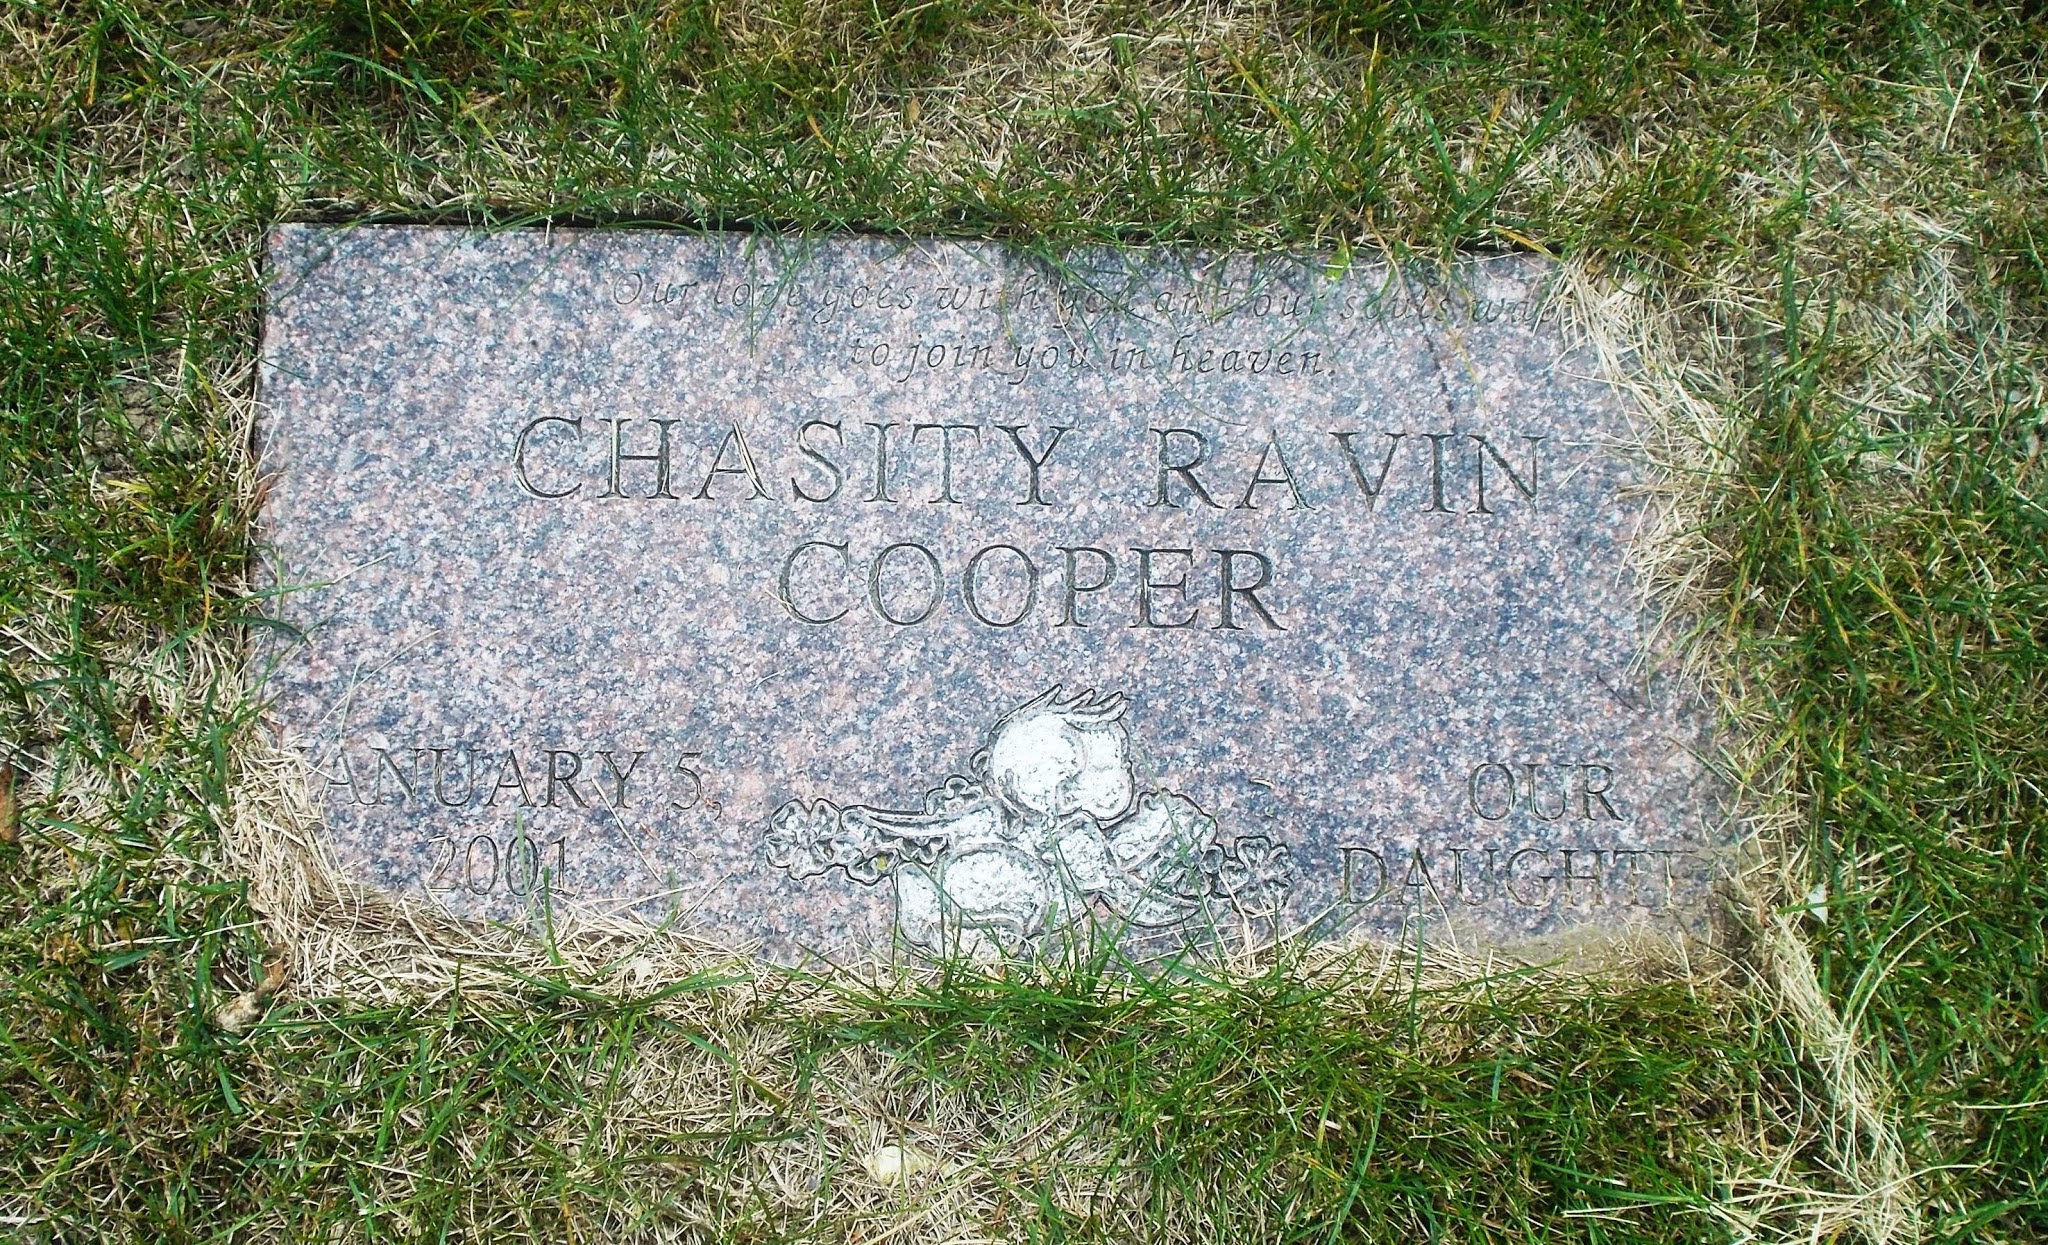 Chasity Raven Cooper